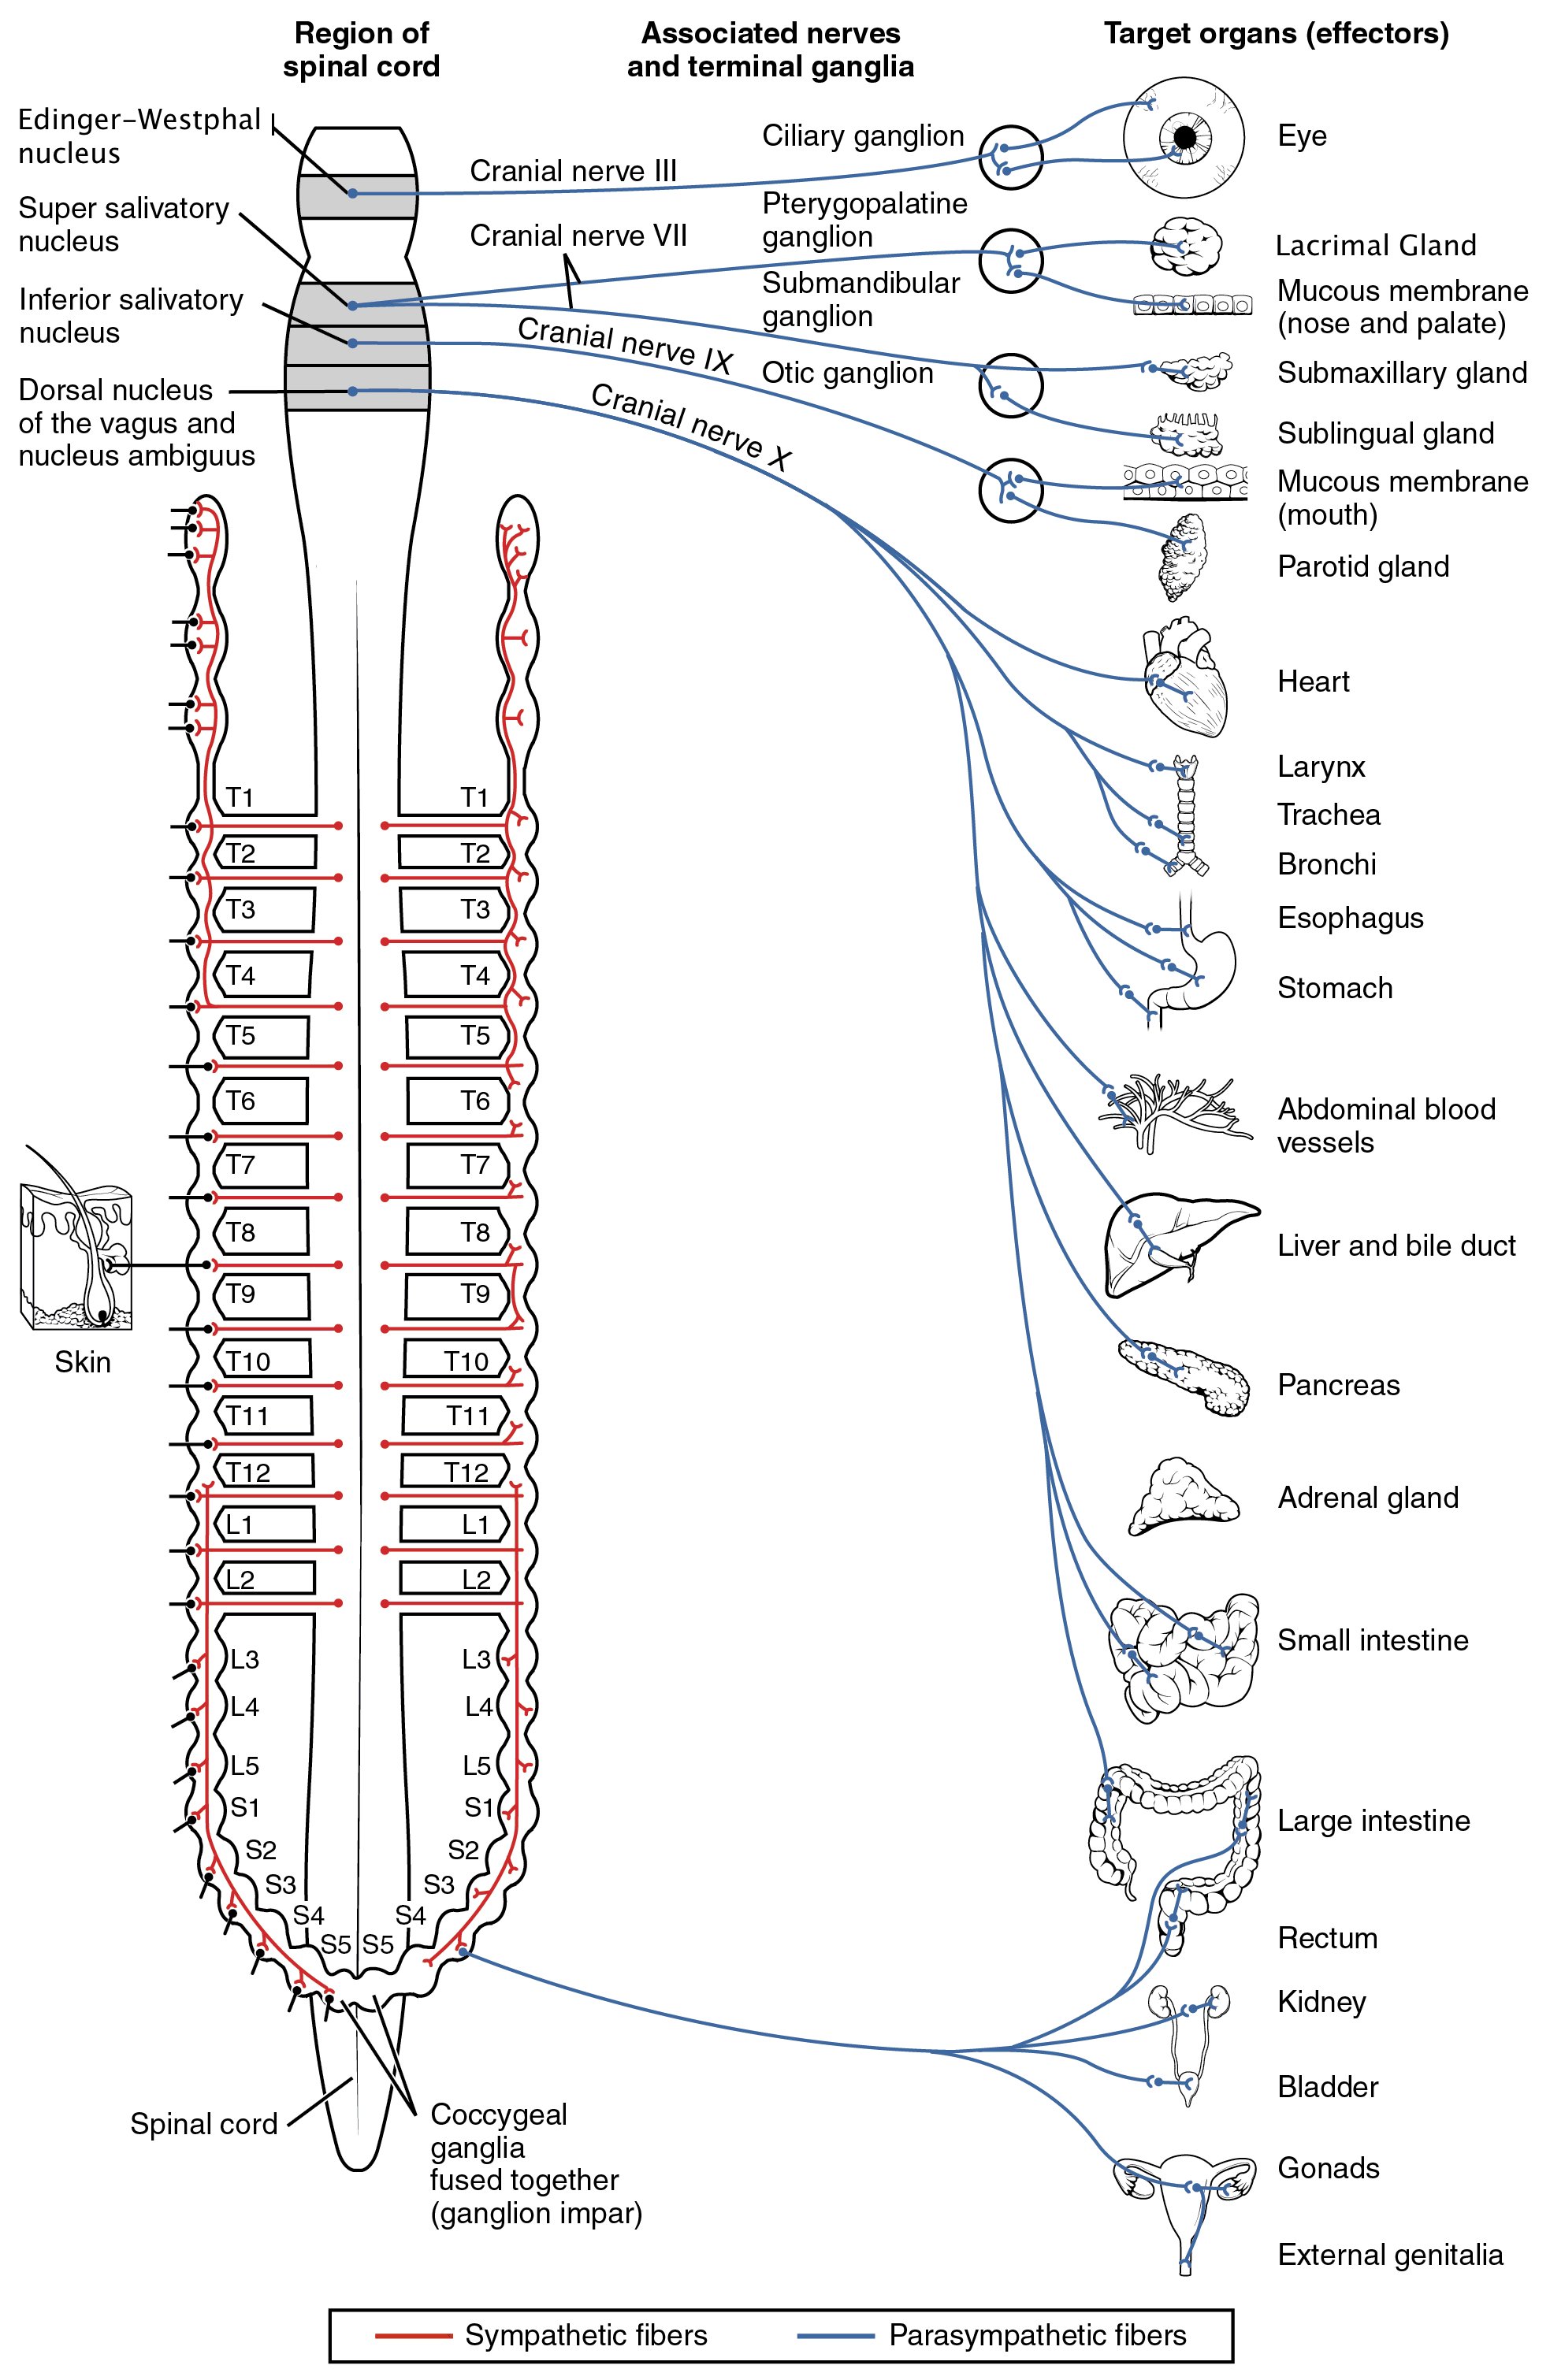 Innvervations of the parasympathetic nervous system.